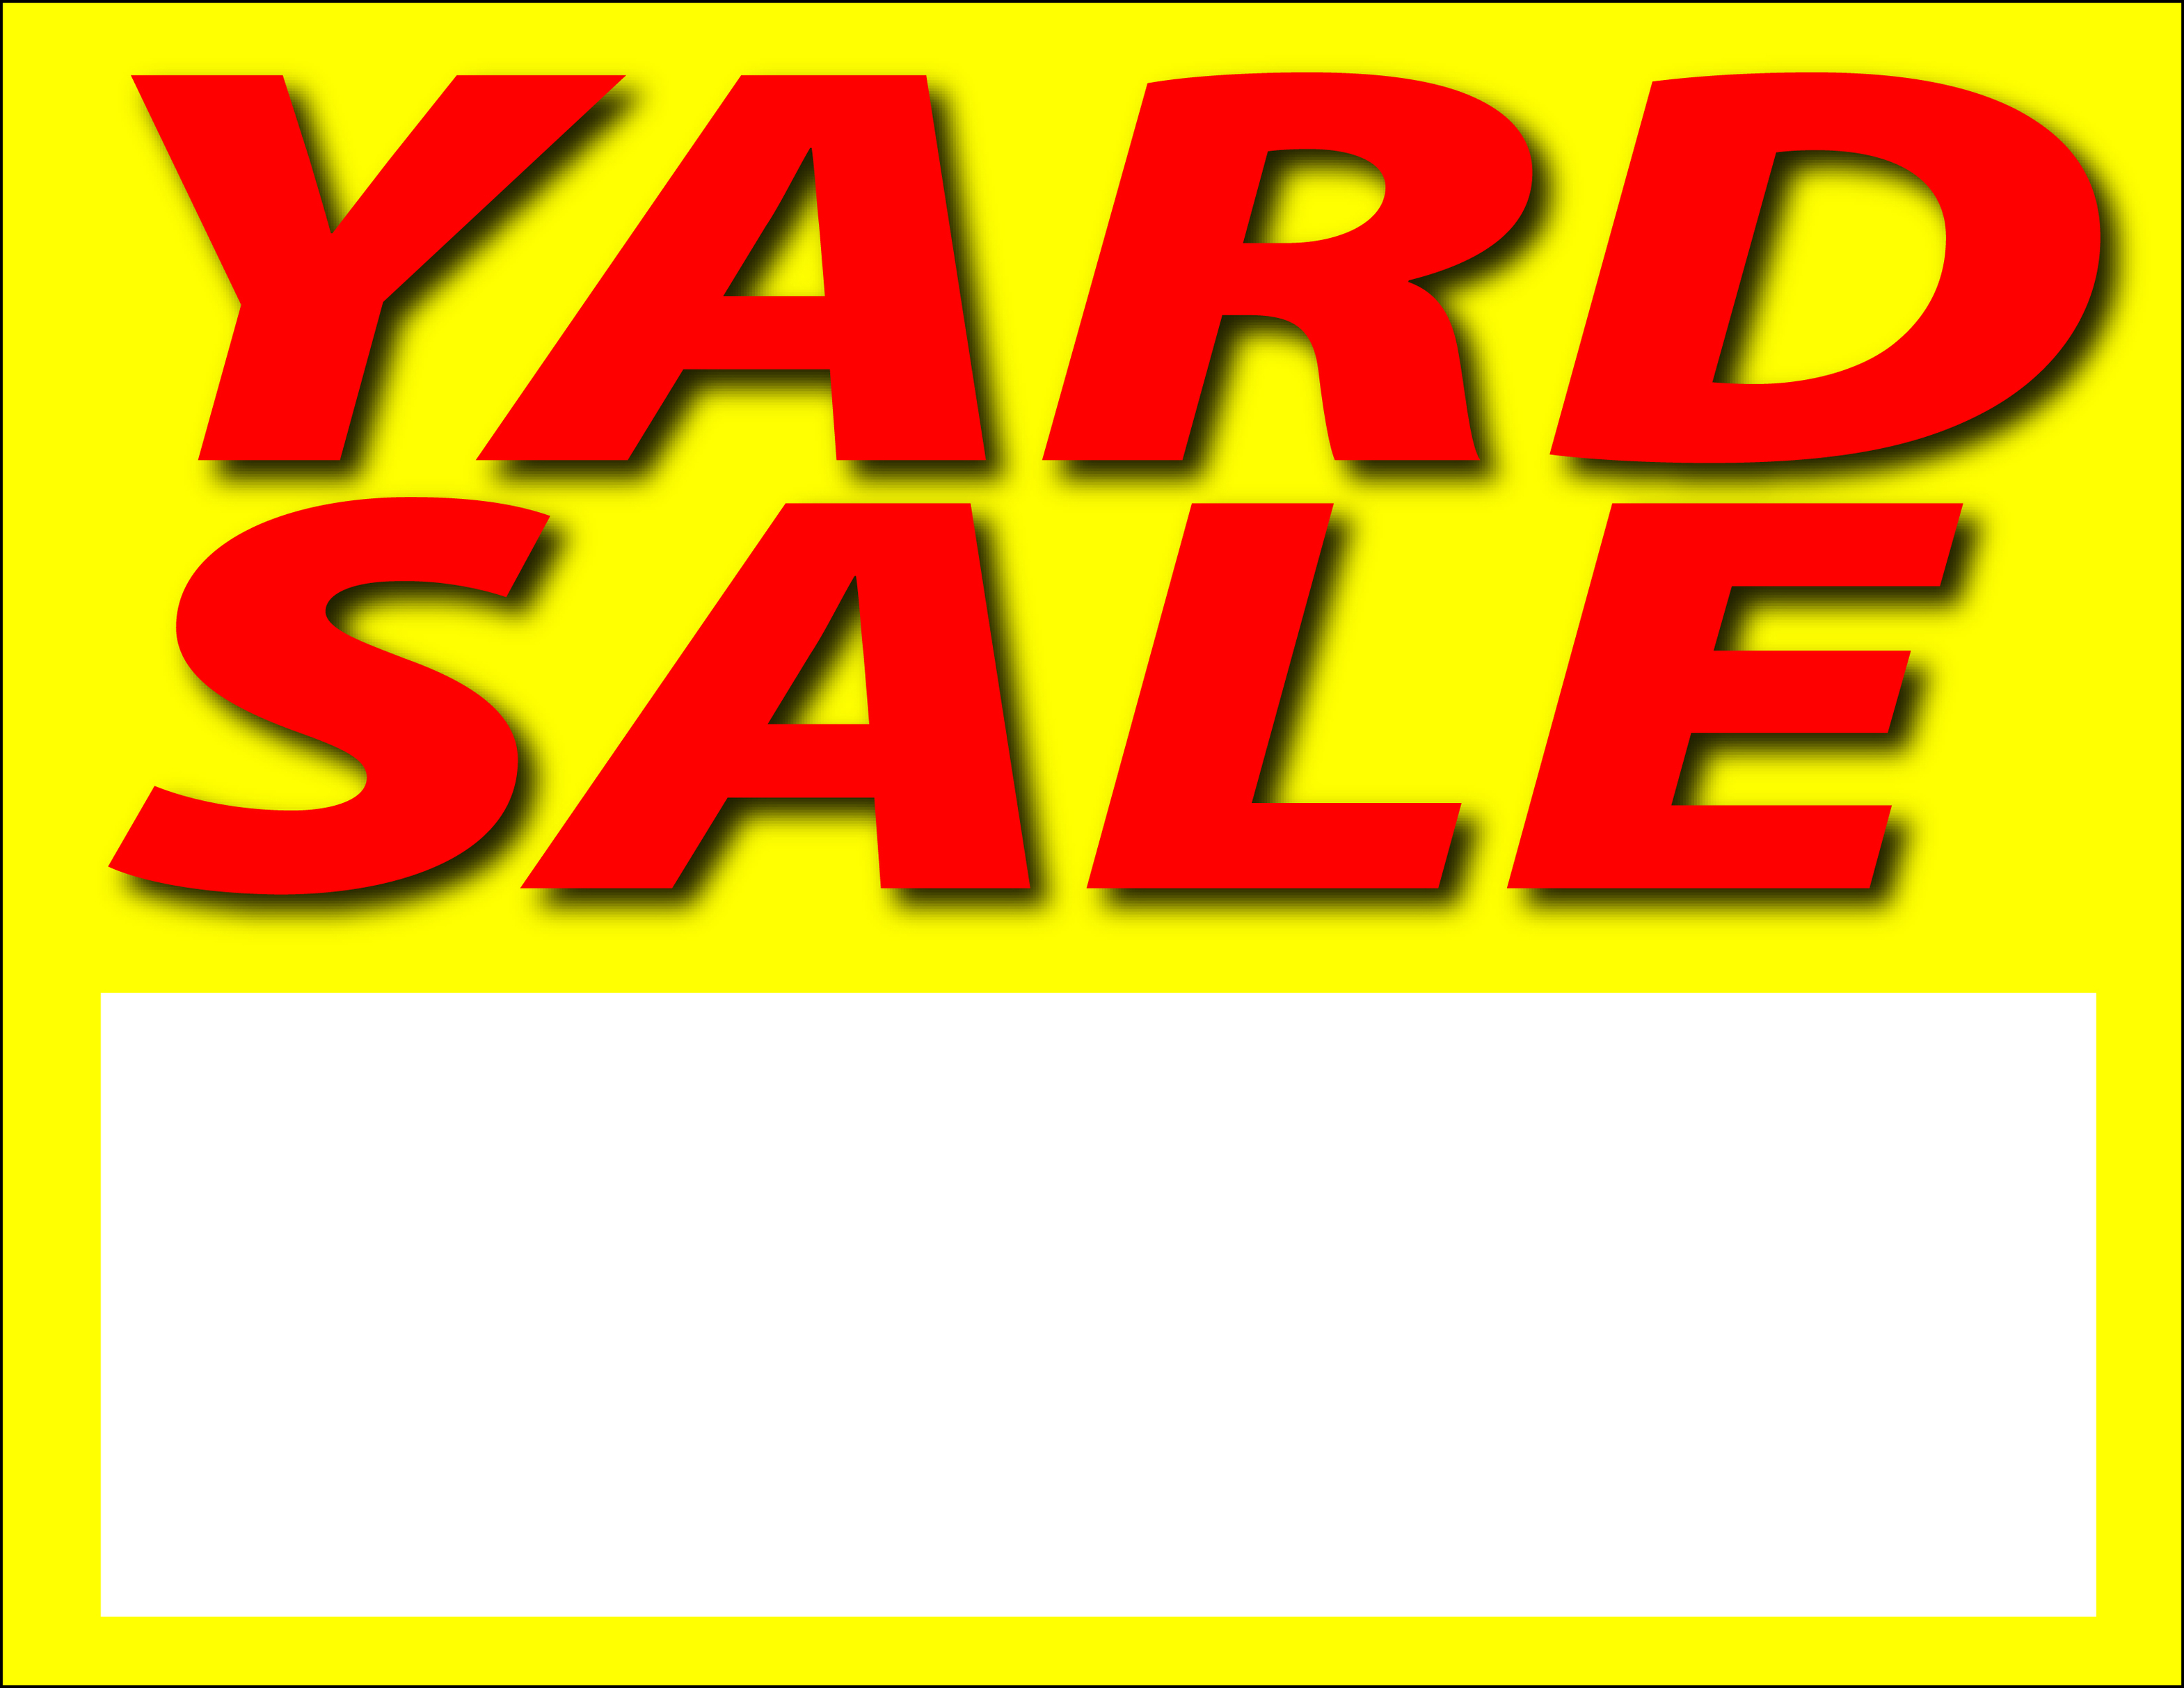 Yard sale sale.